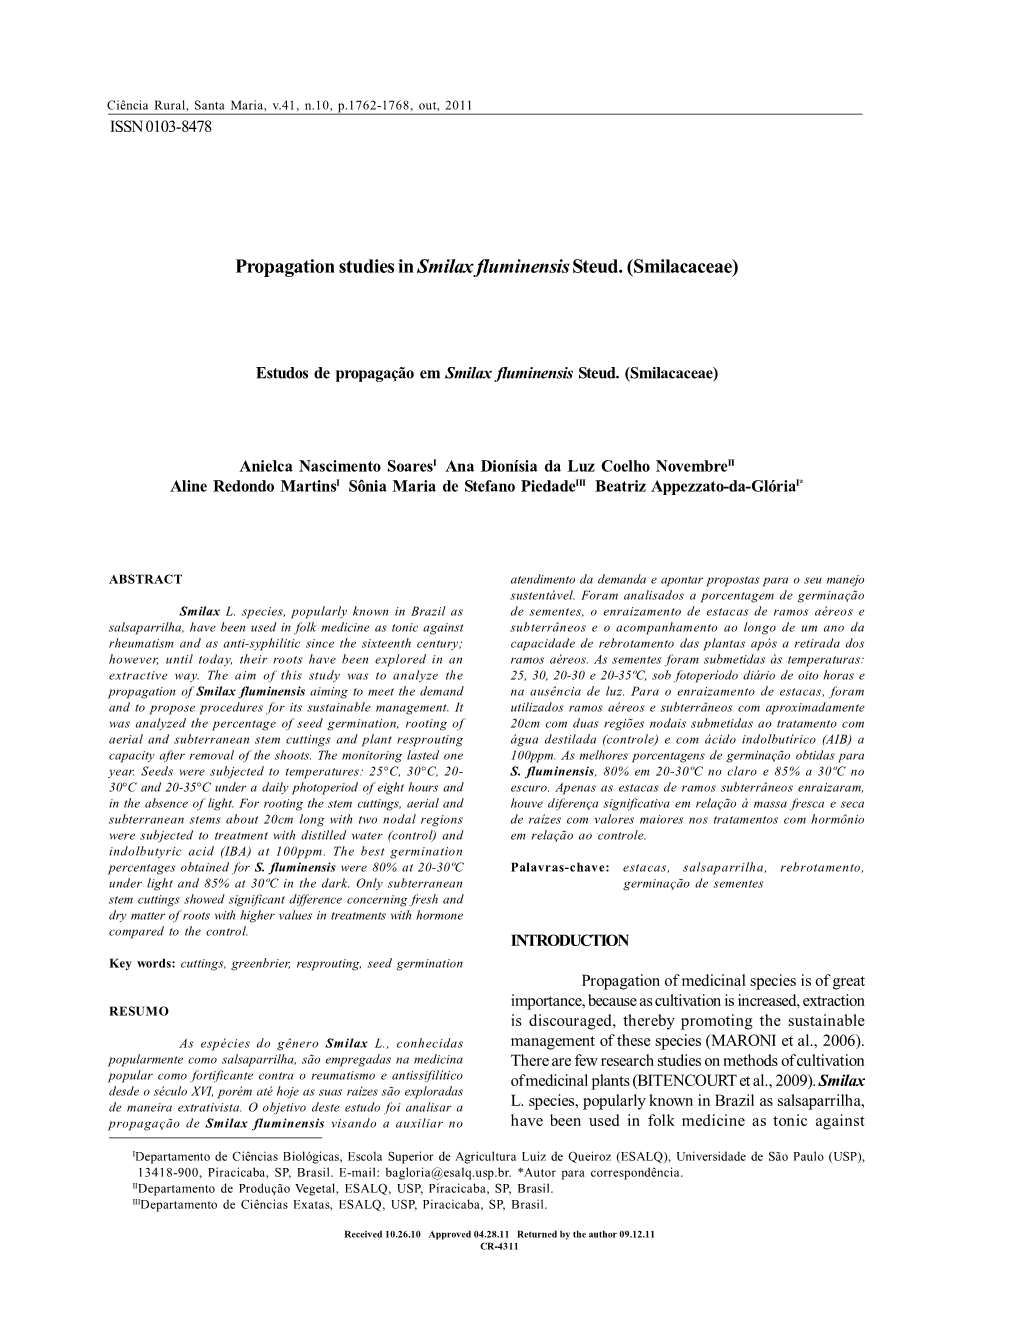 Propagation Studies in Smilax Fluminensissteud. (Smilacaceae)